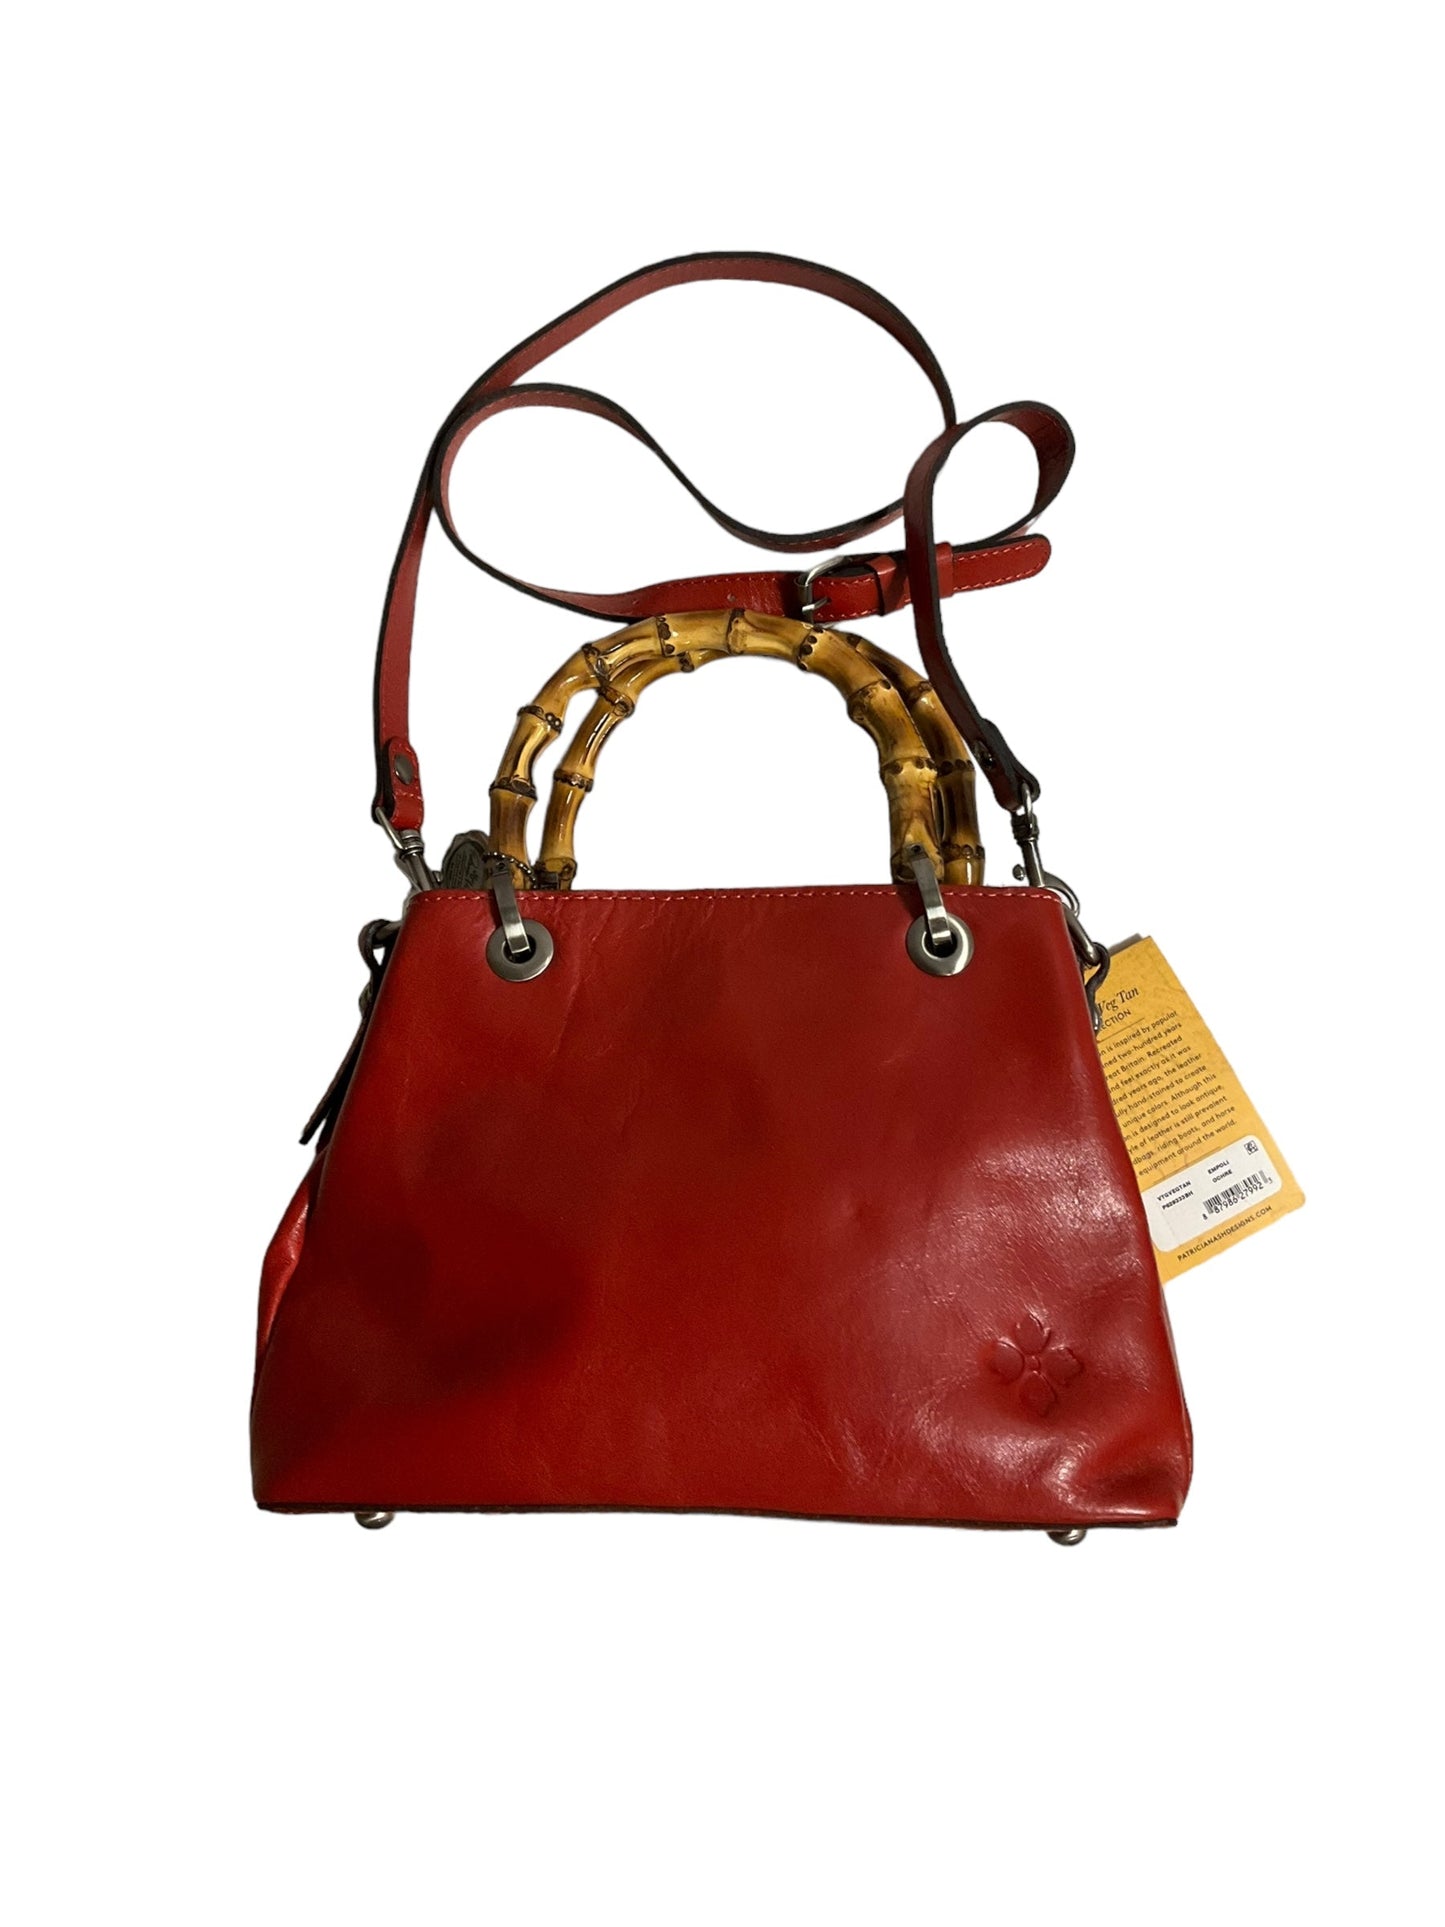 Handbag Designer Patricia Nash, Size Small